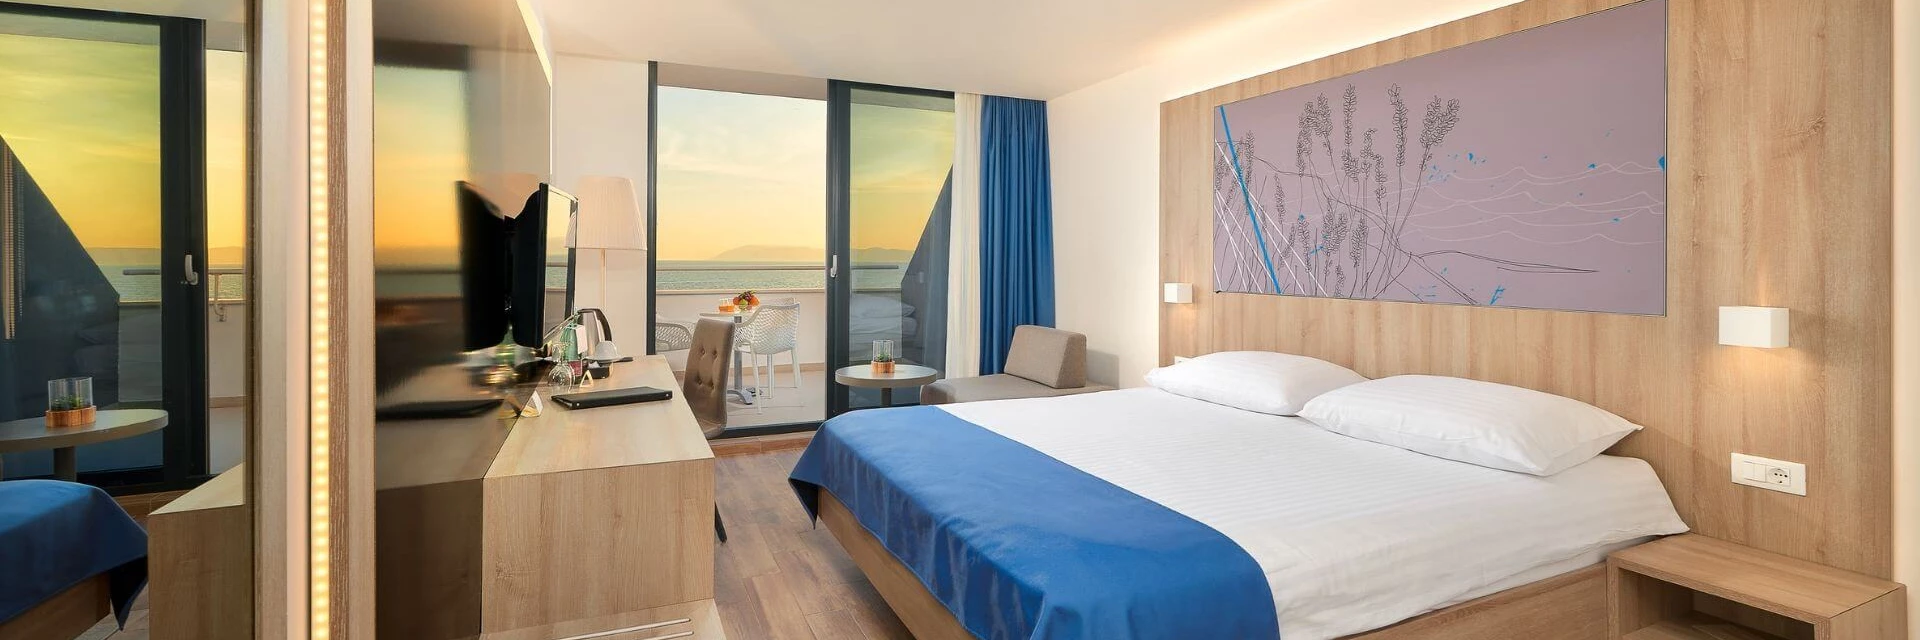 Comfort double room - sea view - balcony